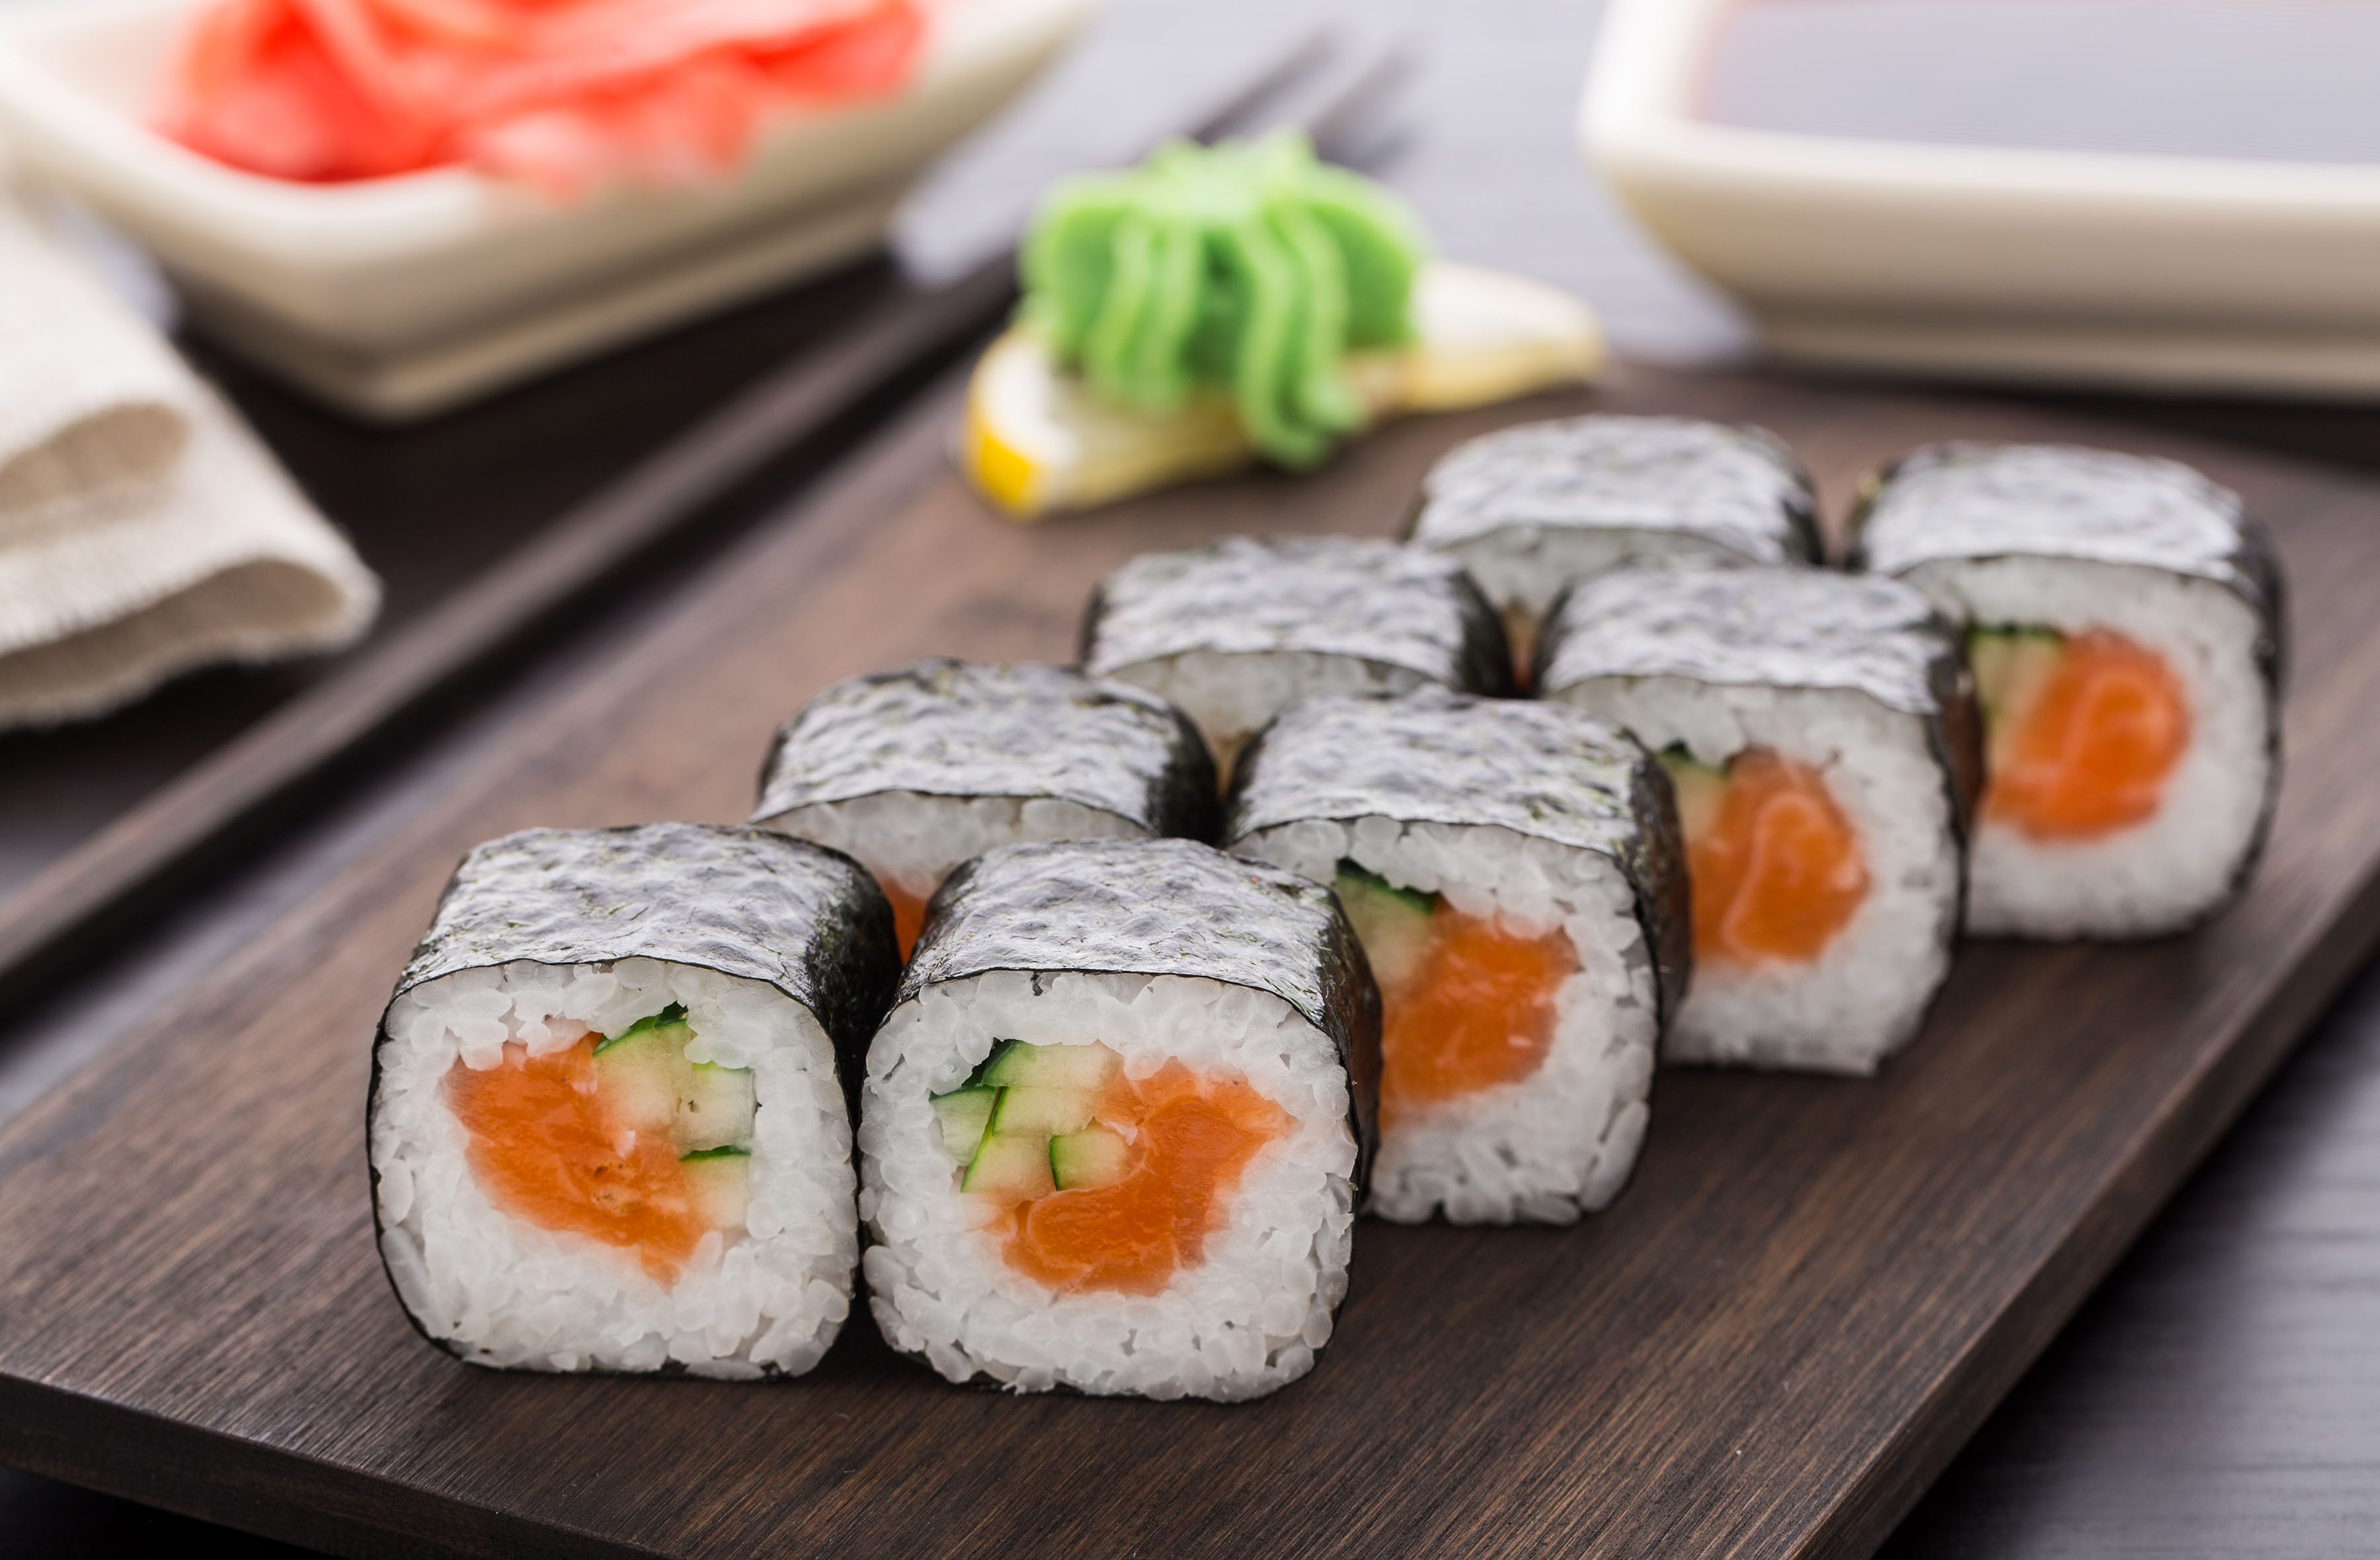 http://www.readersdigest.ca/wp-content/uploads/2011/11/japanese-sushi-rolls.jpg